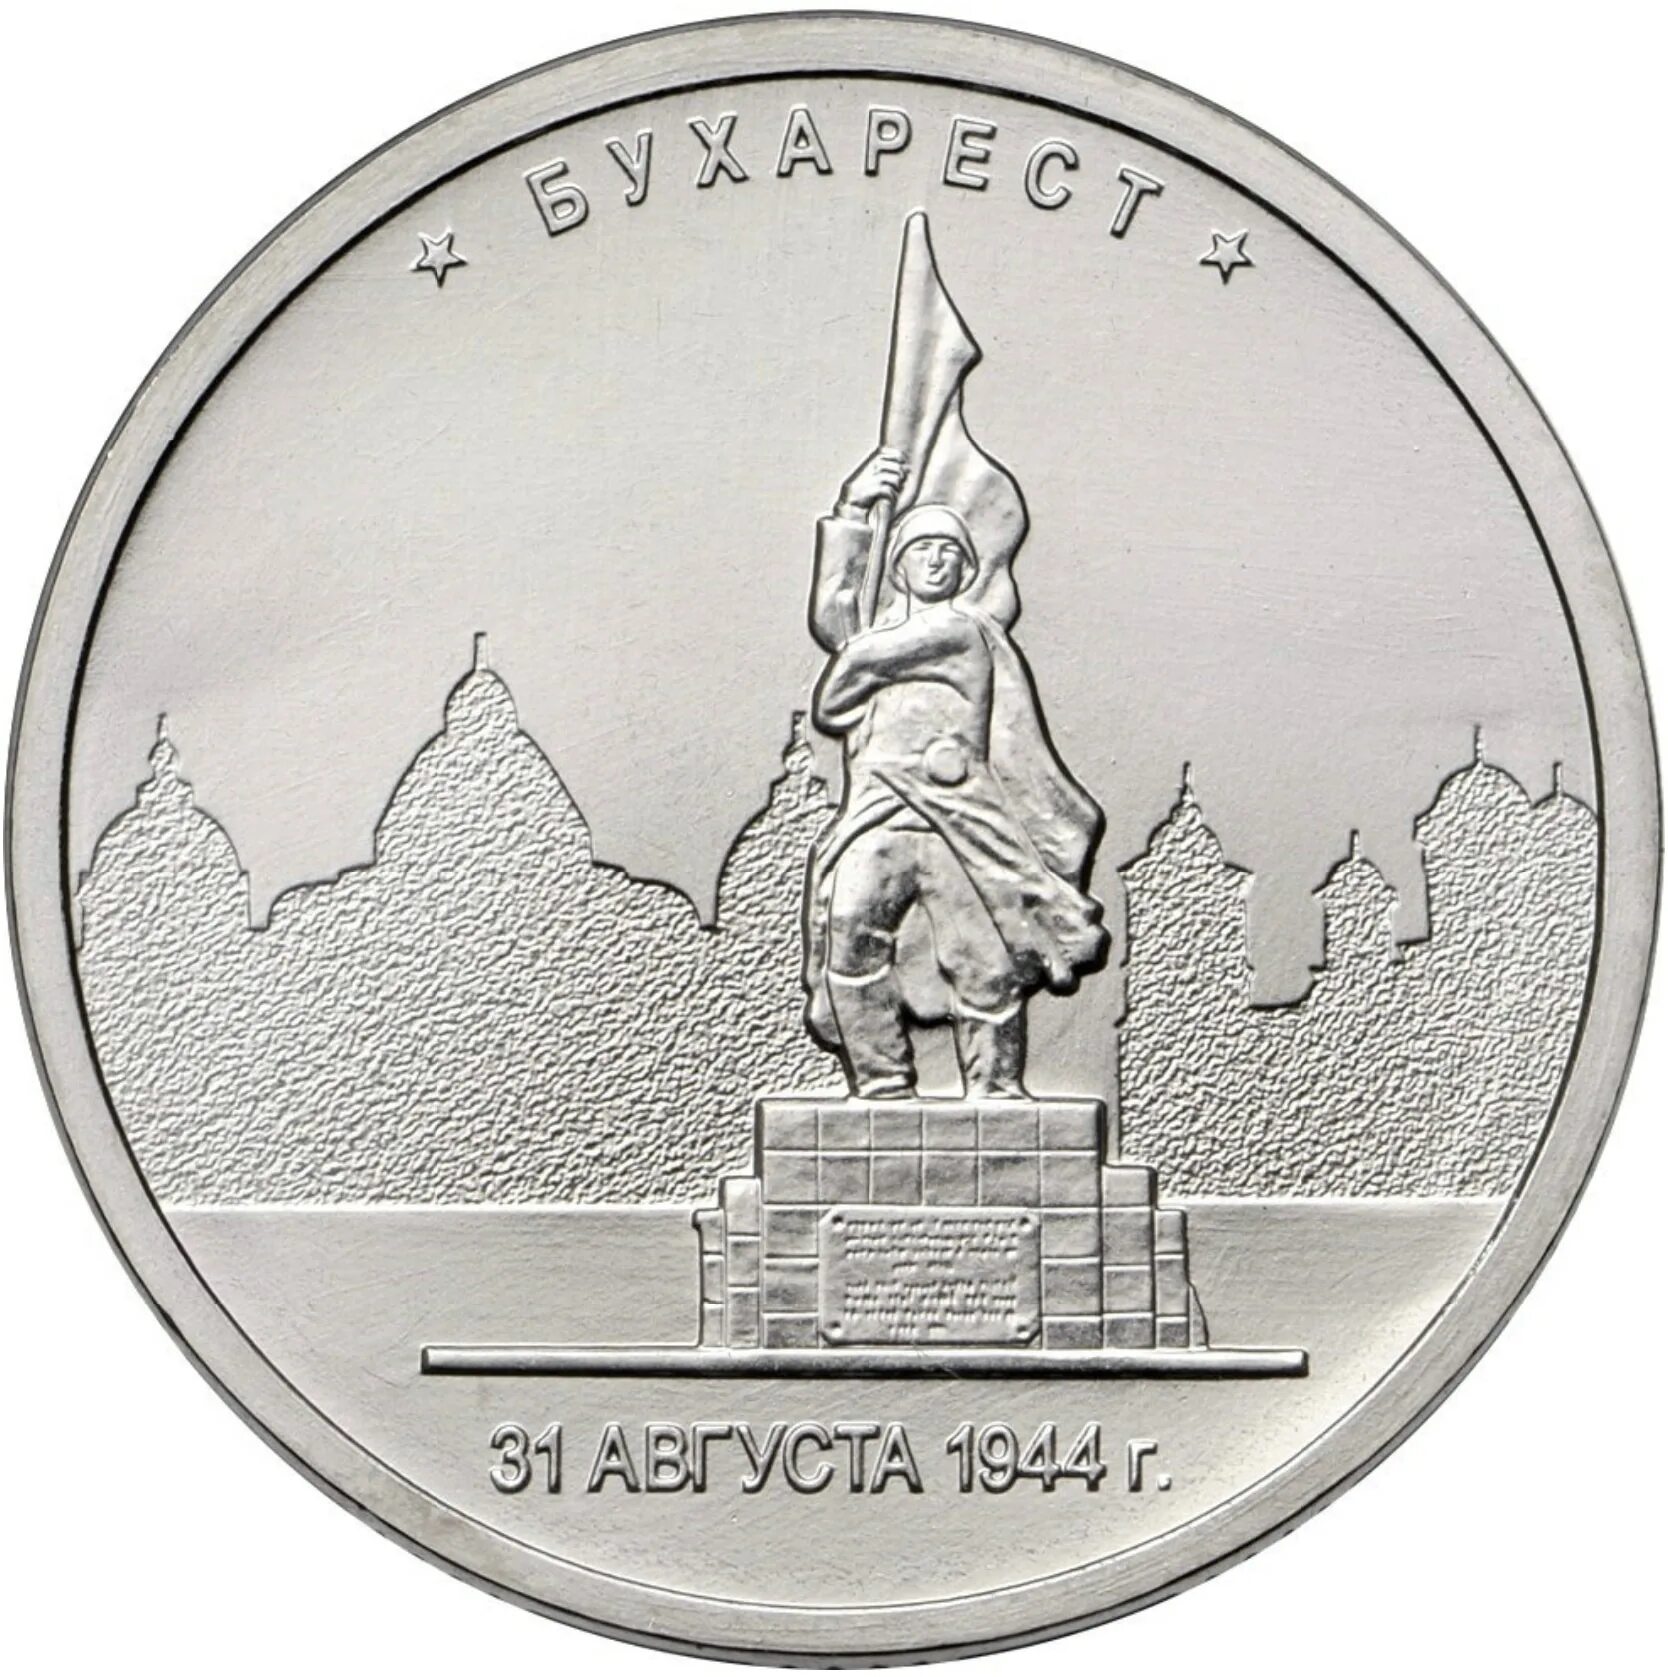 5 Рублей 2016 Бухарест. 5 Рублей 2016 Бухарест 31 августа 1944. 5 Рублей Бухарест. Монета 5 рублей 2016 года Бухарест.